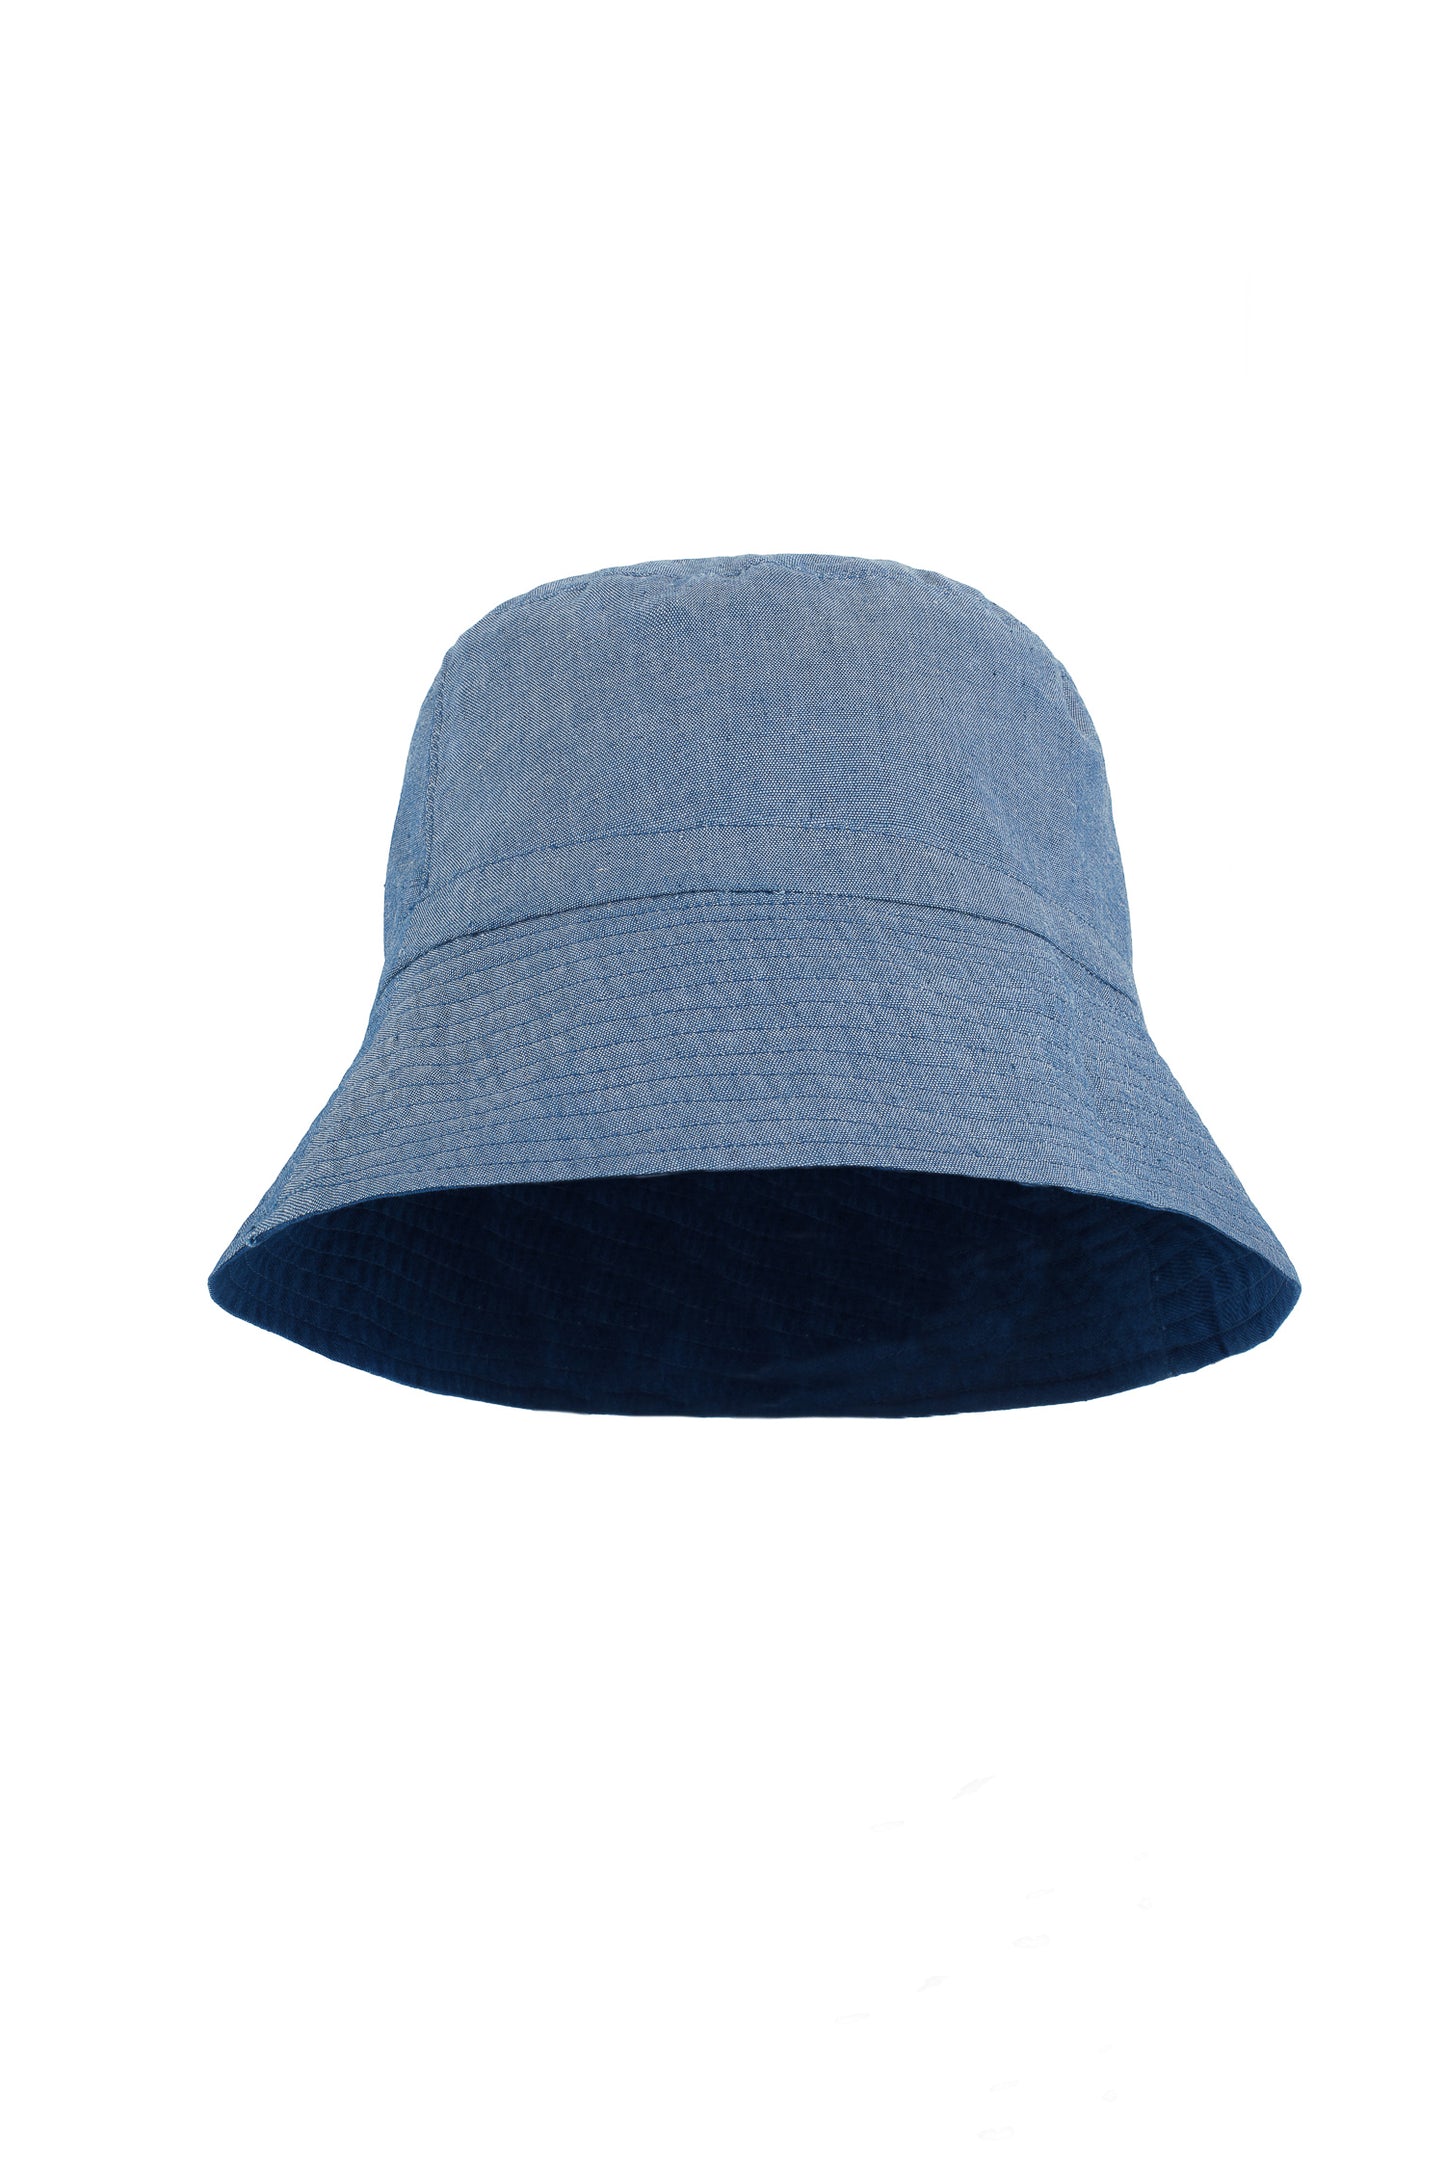 Japanese denim bucket hat by Saywood. Rich natural indigo reversible bucket hat, unisex.